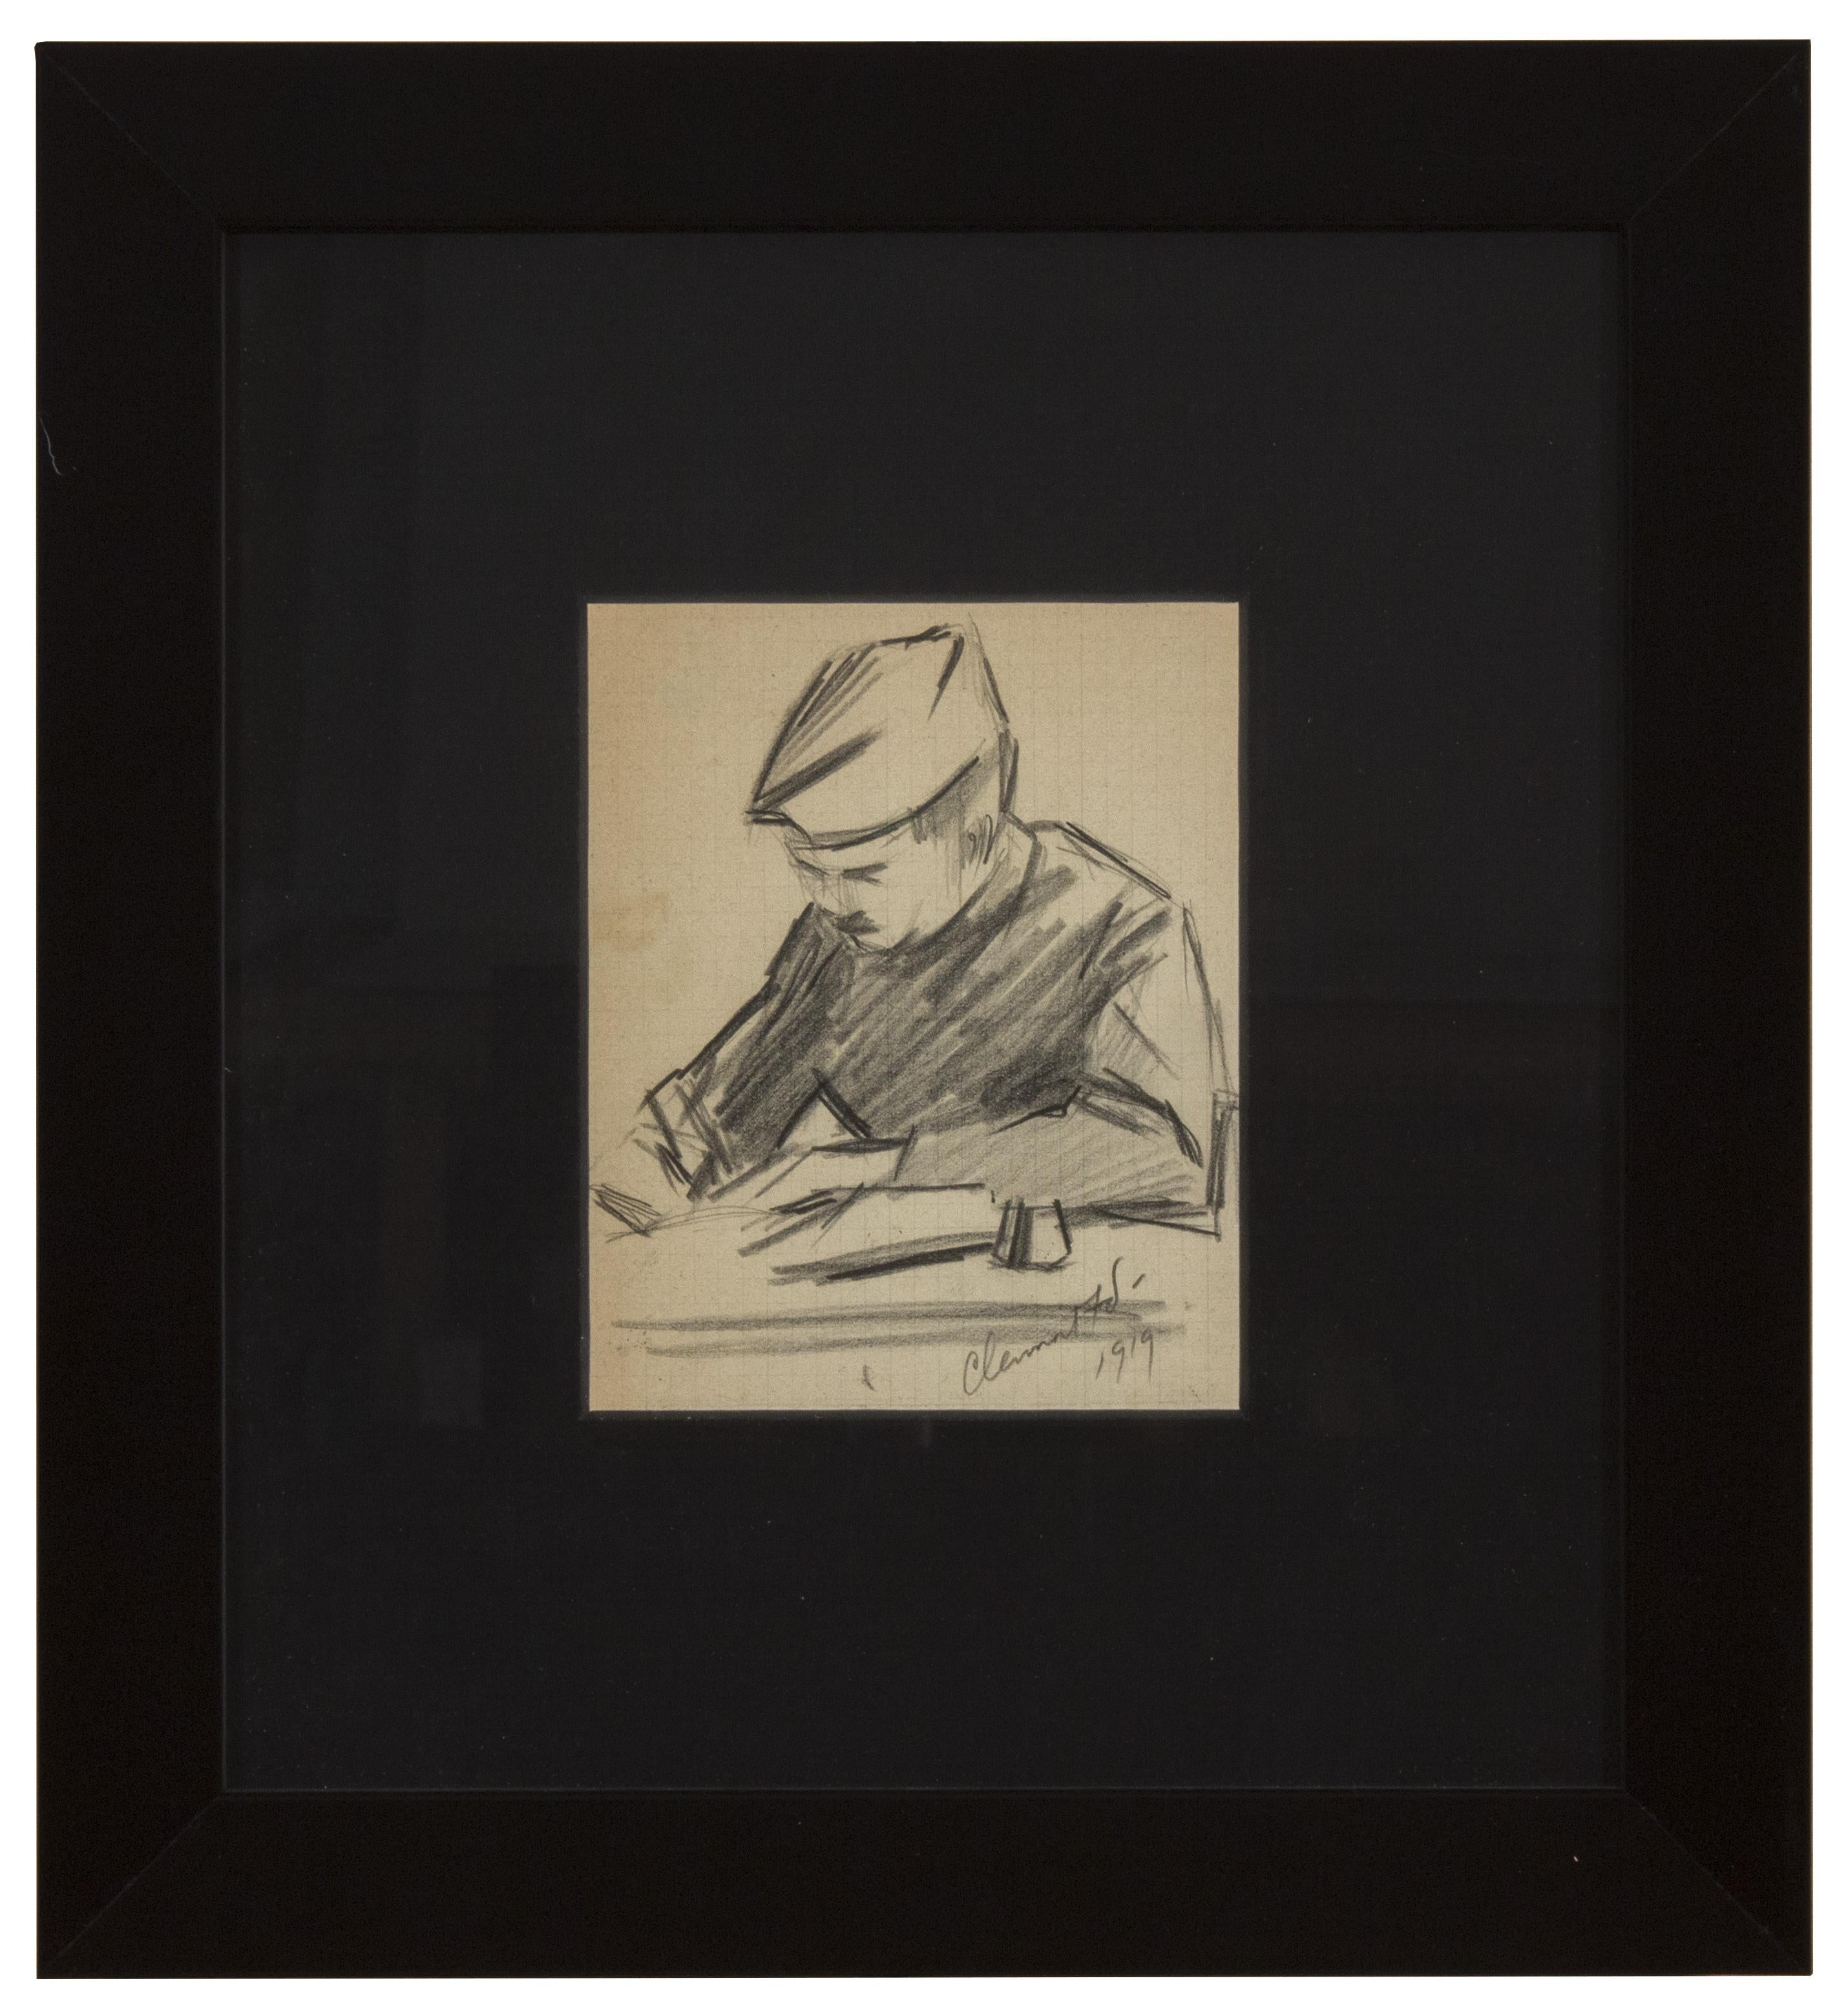 Julius Bloch Figurative Art - Sketch of a Man Writing or Drawing